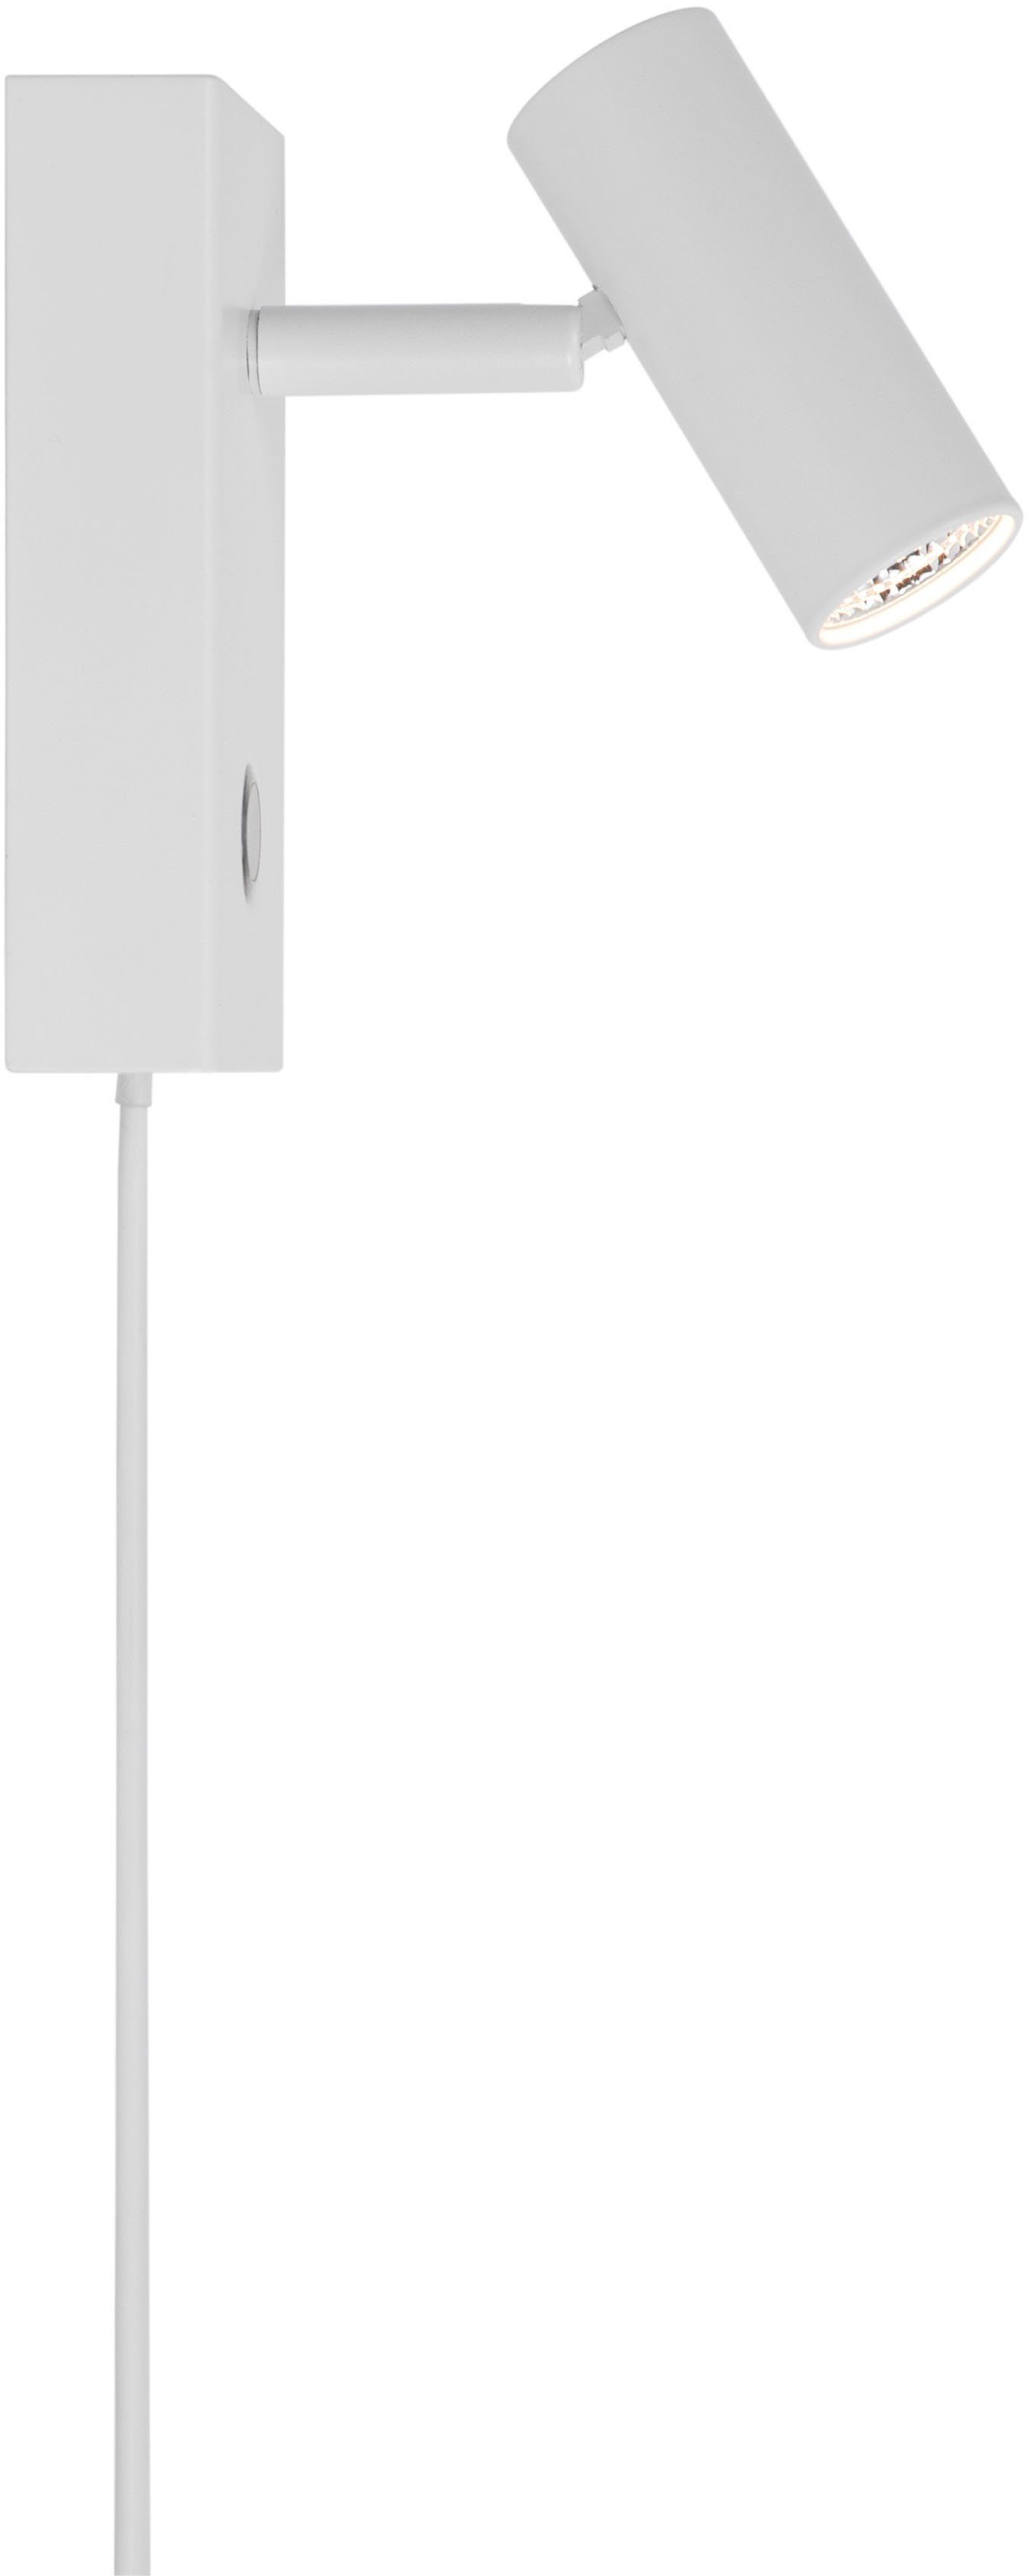 günstiger Kauf Nordlux LED Wandleuchte Dimmer Touch LED inkl. Dimmer integriert, Stufen 3 über OMARI, fest